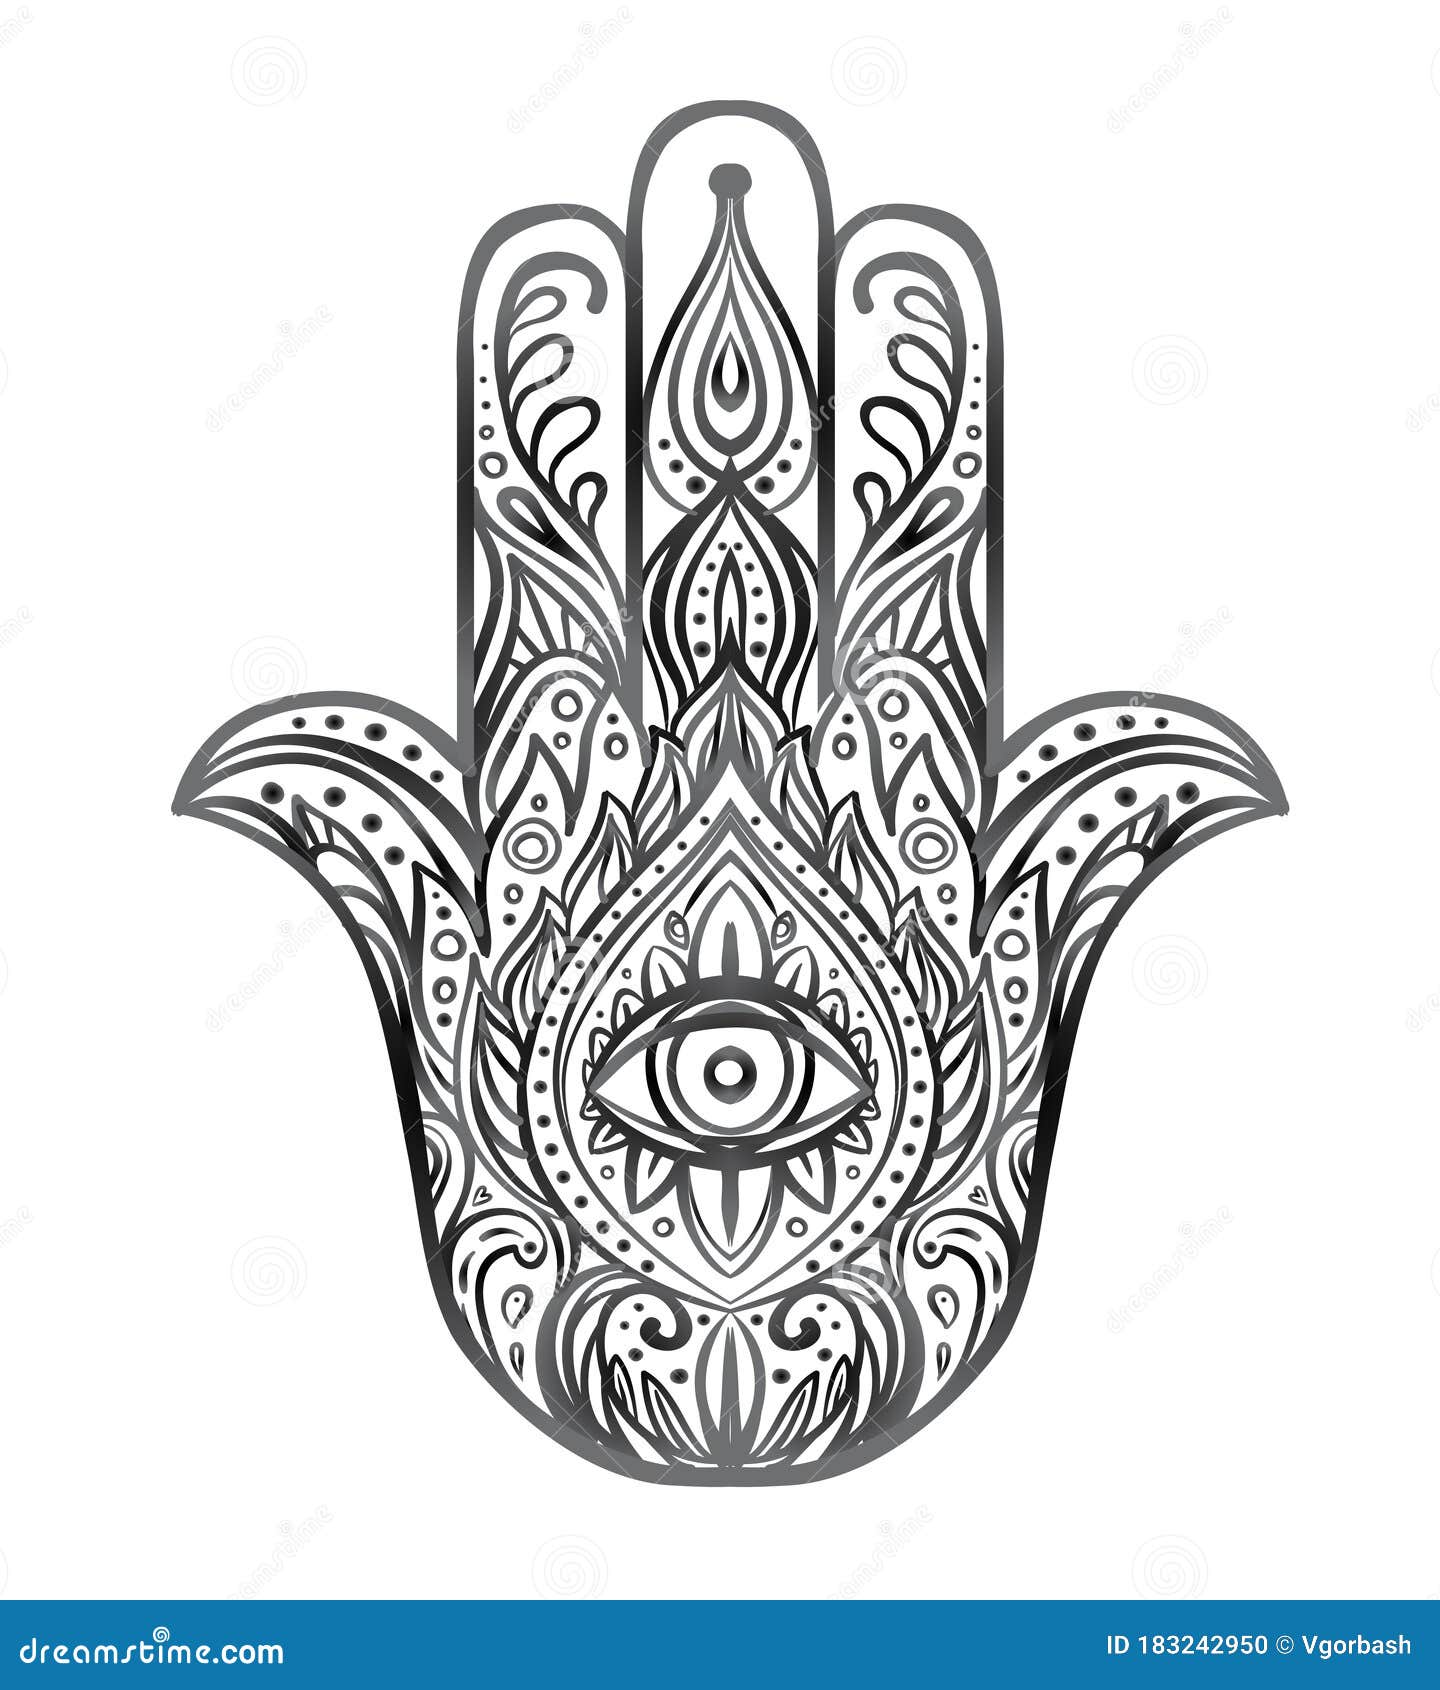 Ornate Hand Drawn Hamsa Popular Arabic And Jewish Amulet Vector Illustration Isolated On White Tattoo Design Mystic Stock Vector Illustration Of Israel Arabic